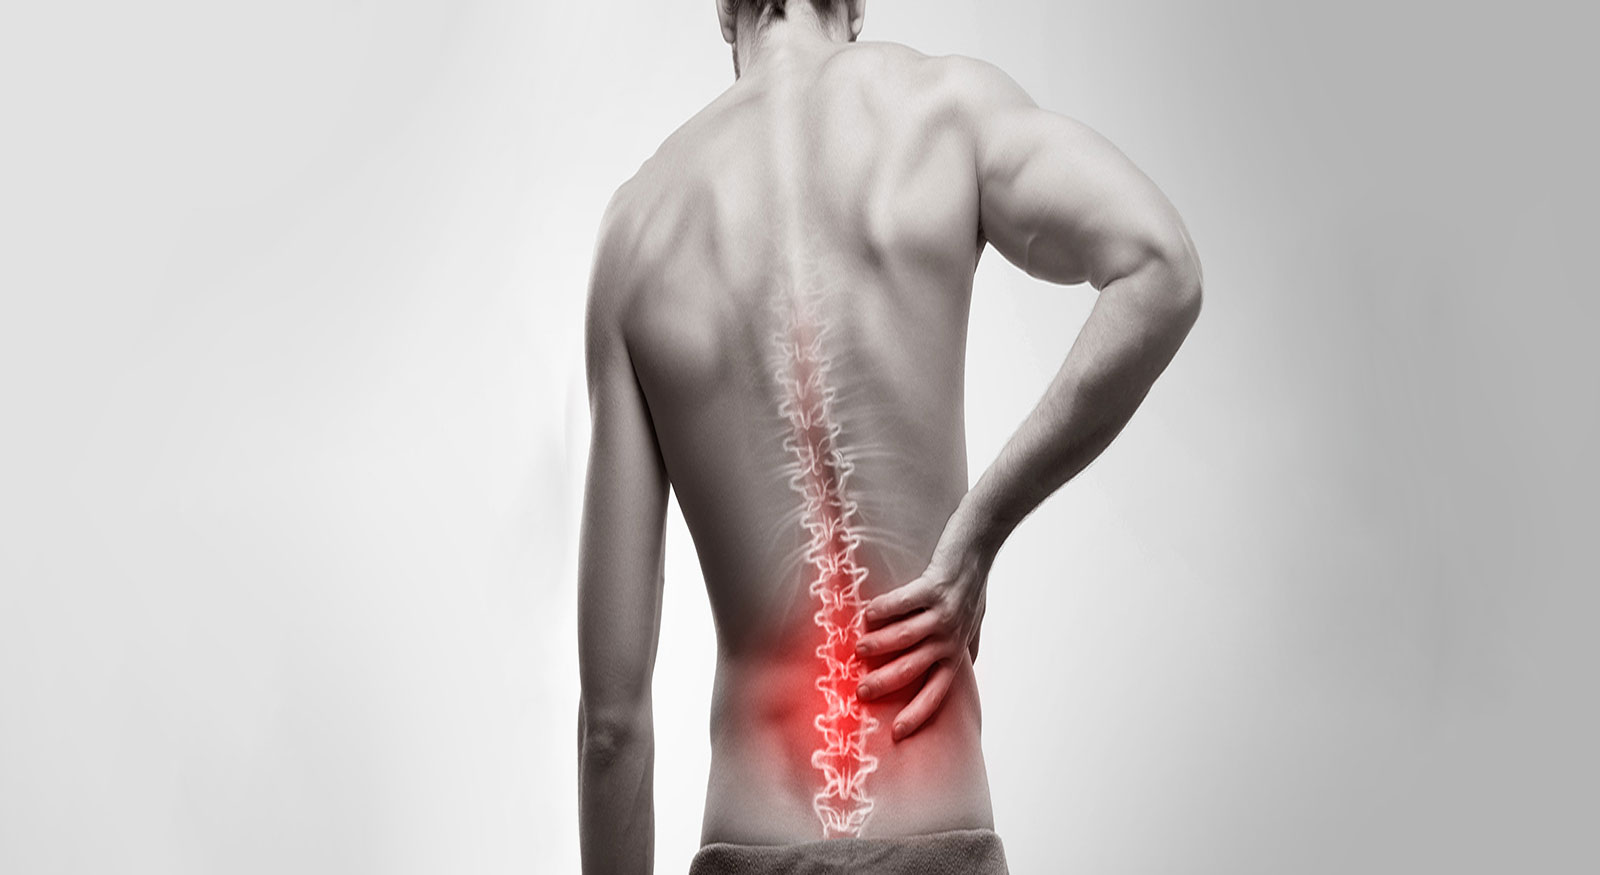 Spinal Surgeries